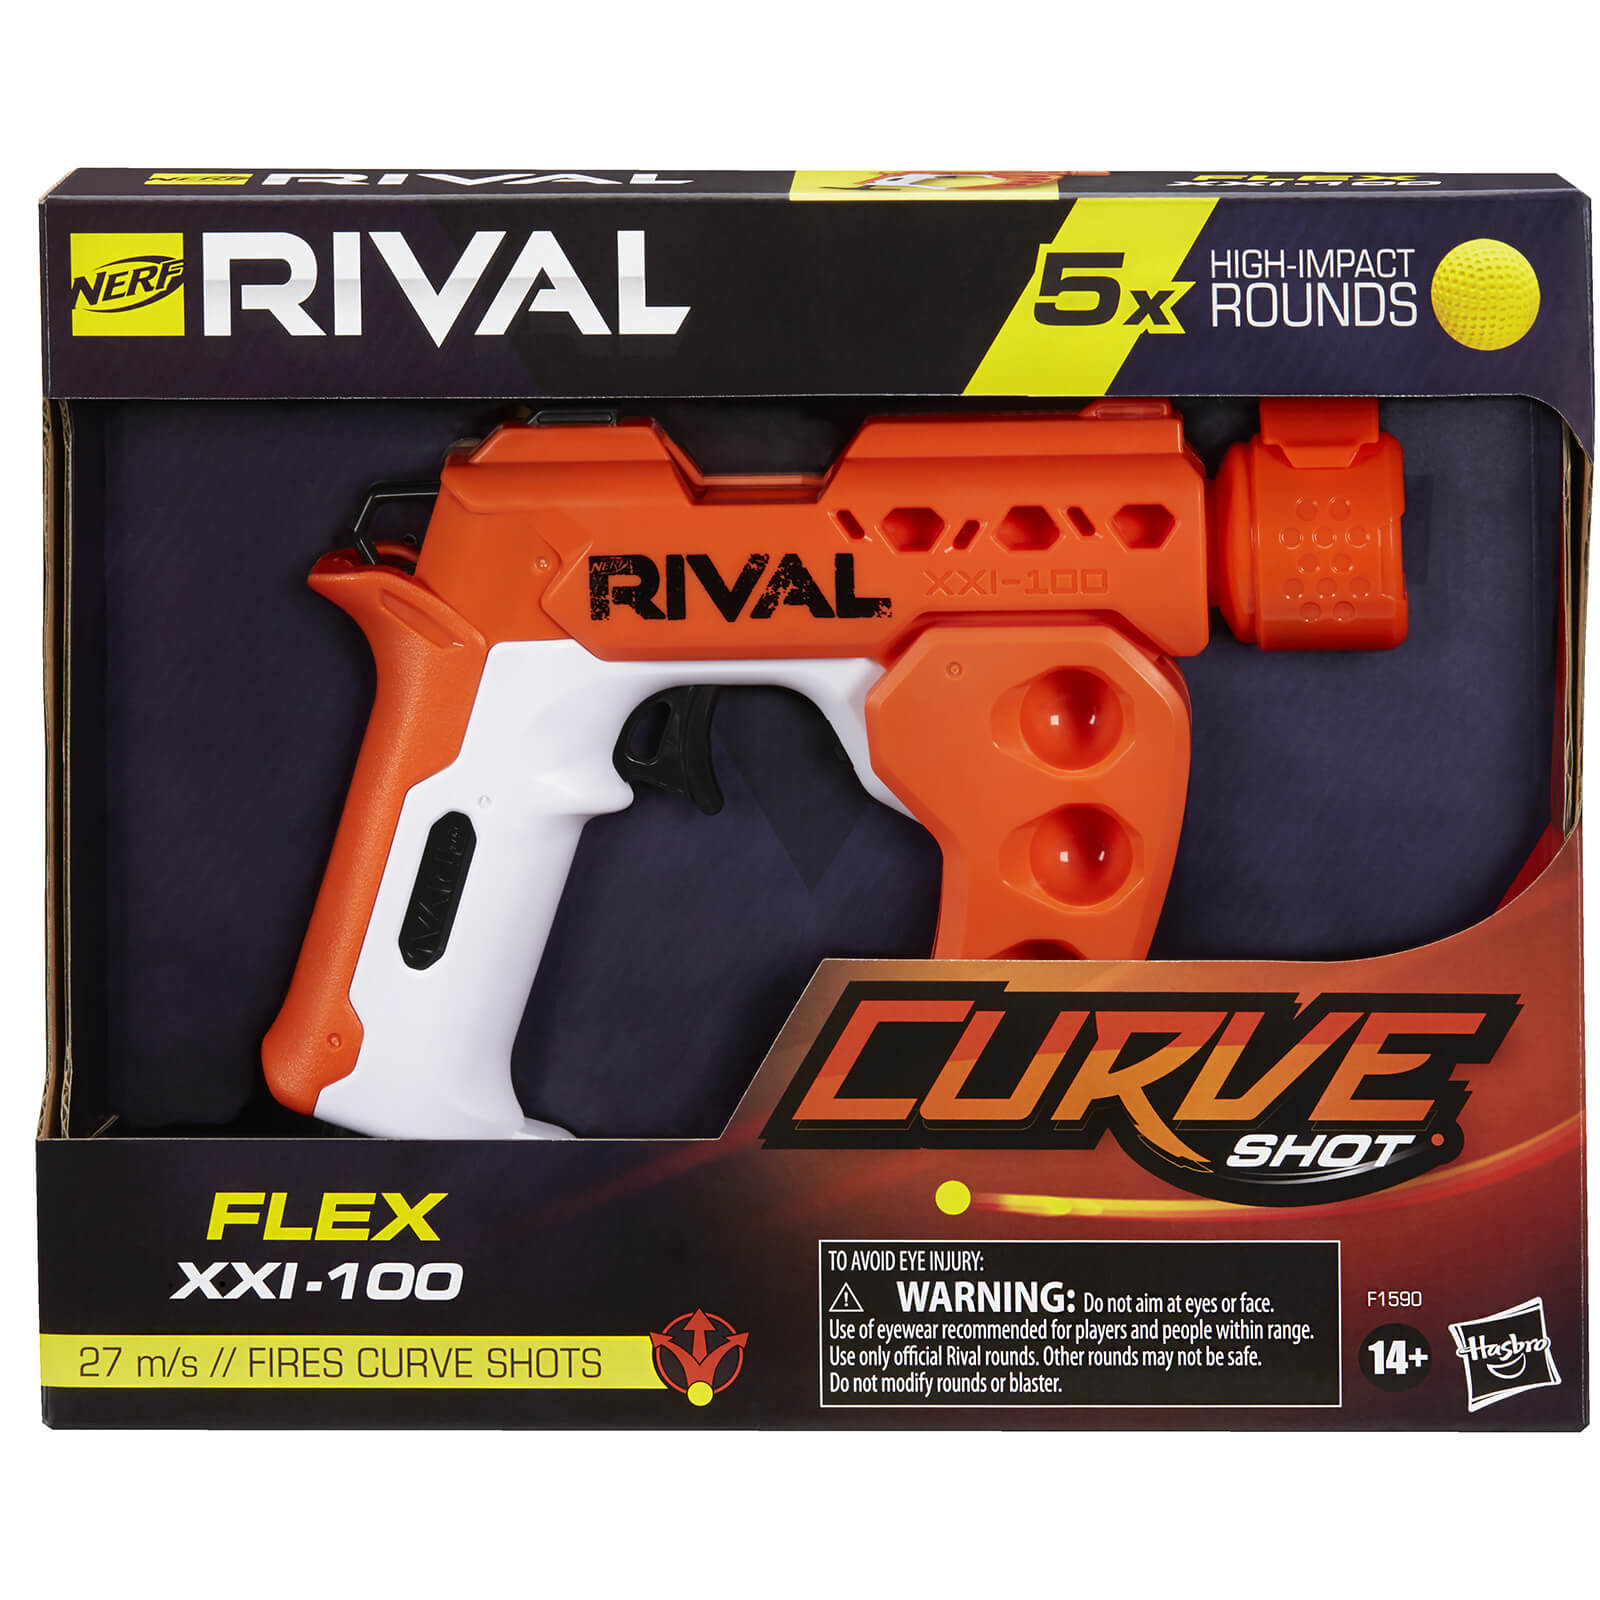 Nerf Rival Curve Shot Flex XXI-100 Blaster